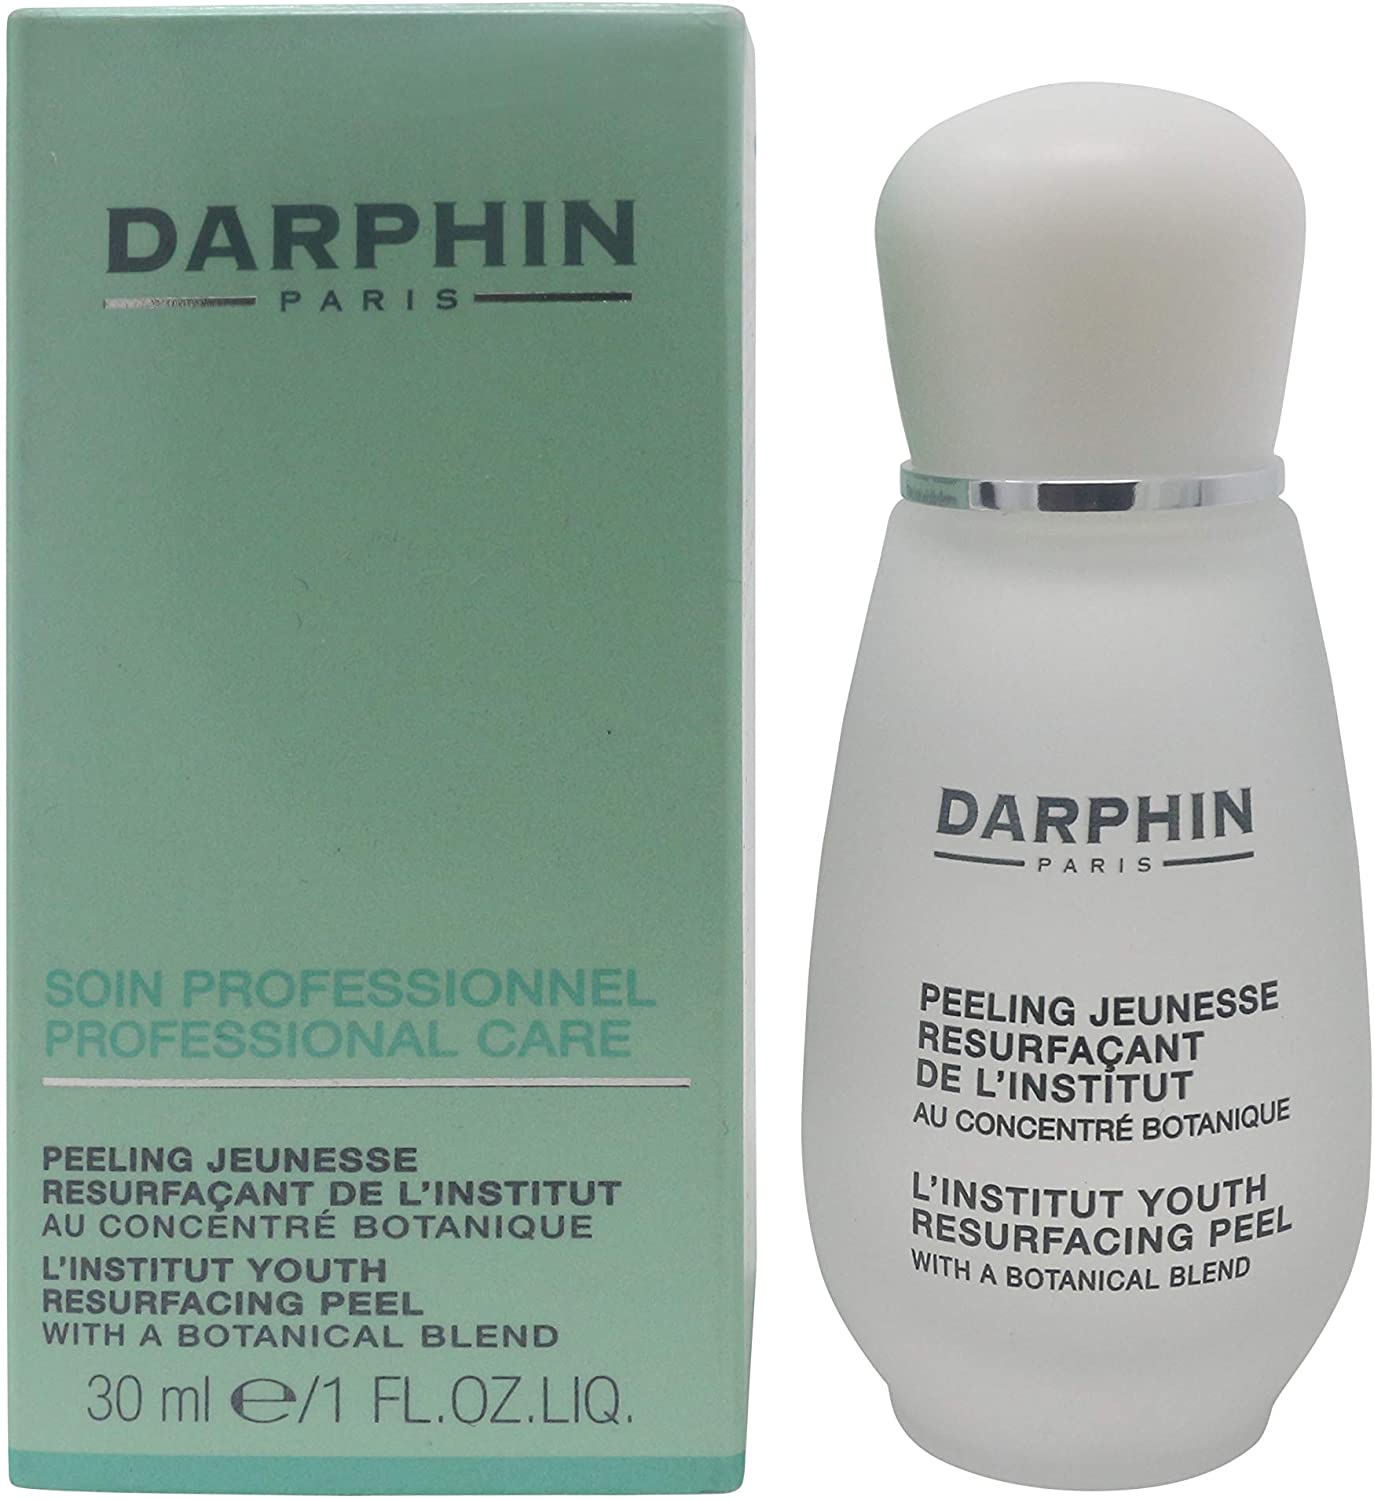 Darphin Professional Care Peeling Jeunesse